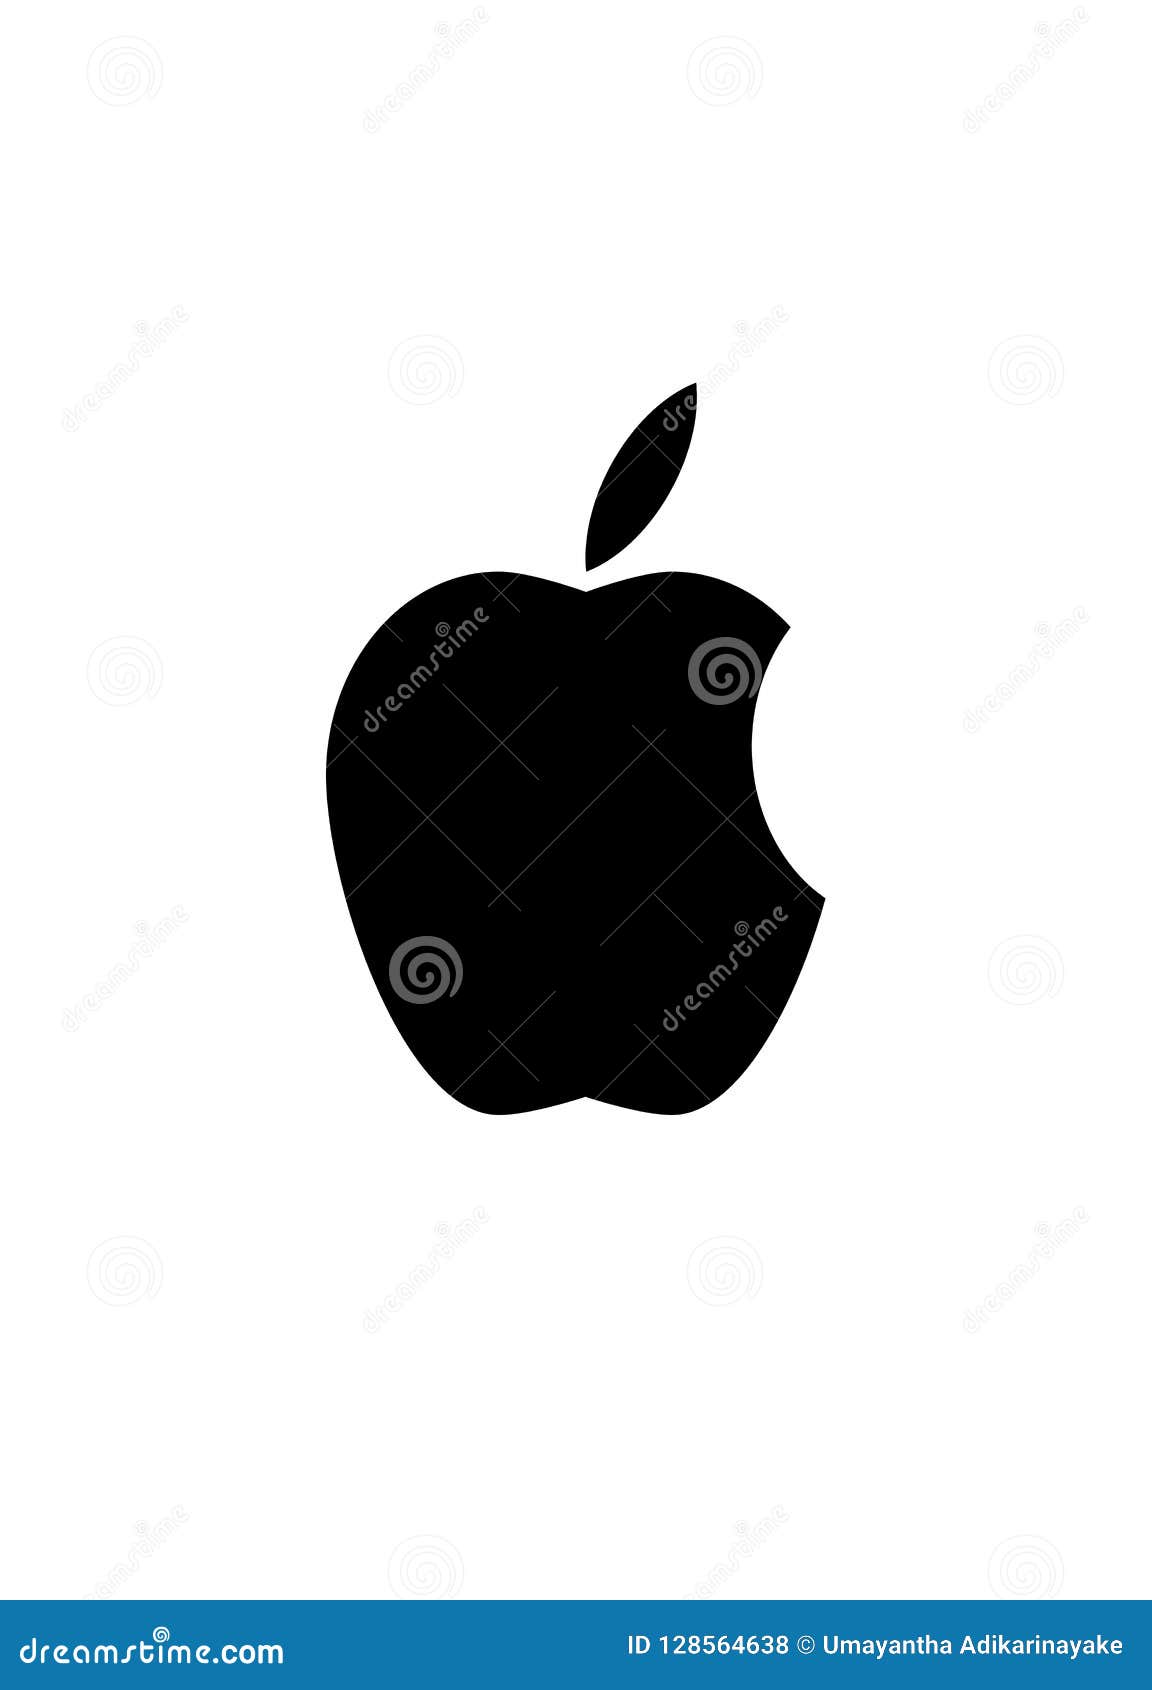 Apple Logo editorial stock photo. Illustration of imac - 128564638